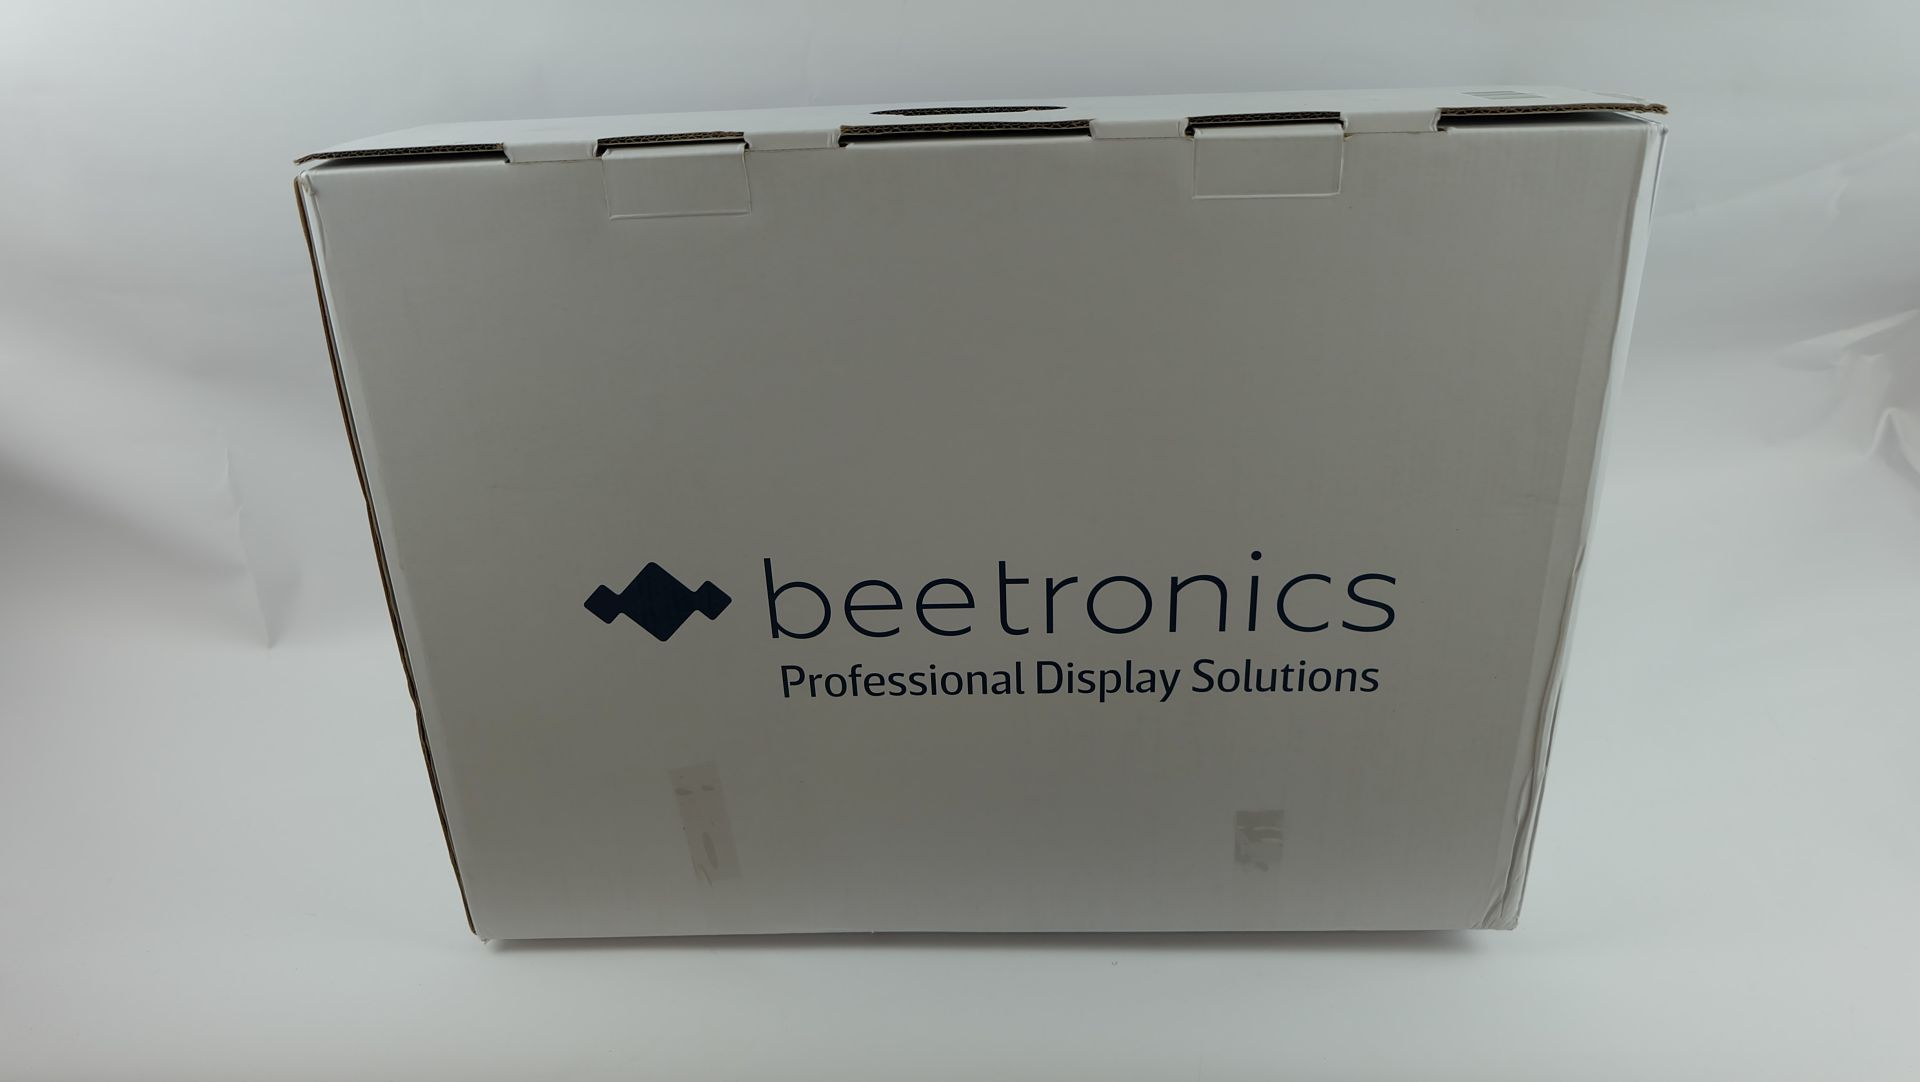 Beetronics 19 inch monitor BEE-19VG7M.